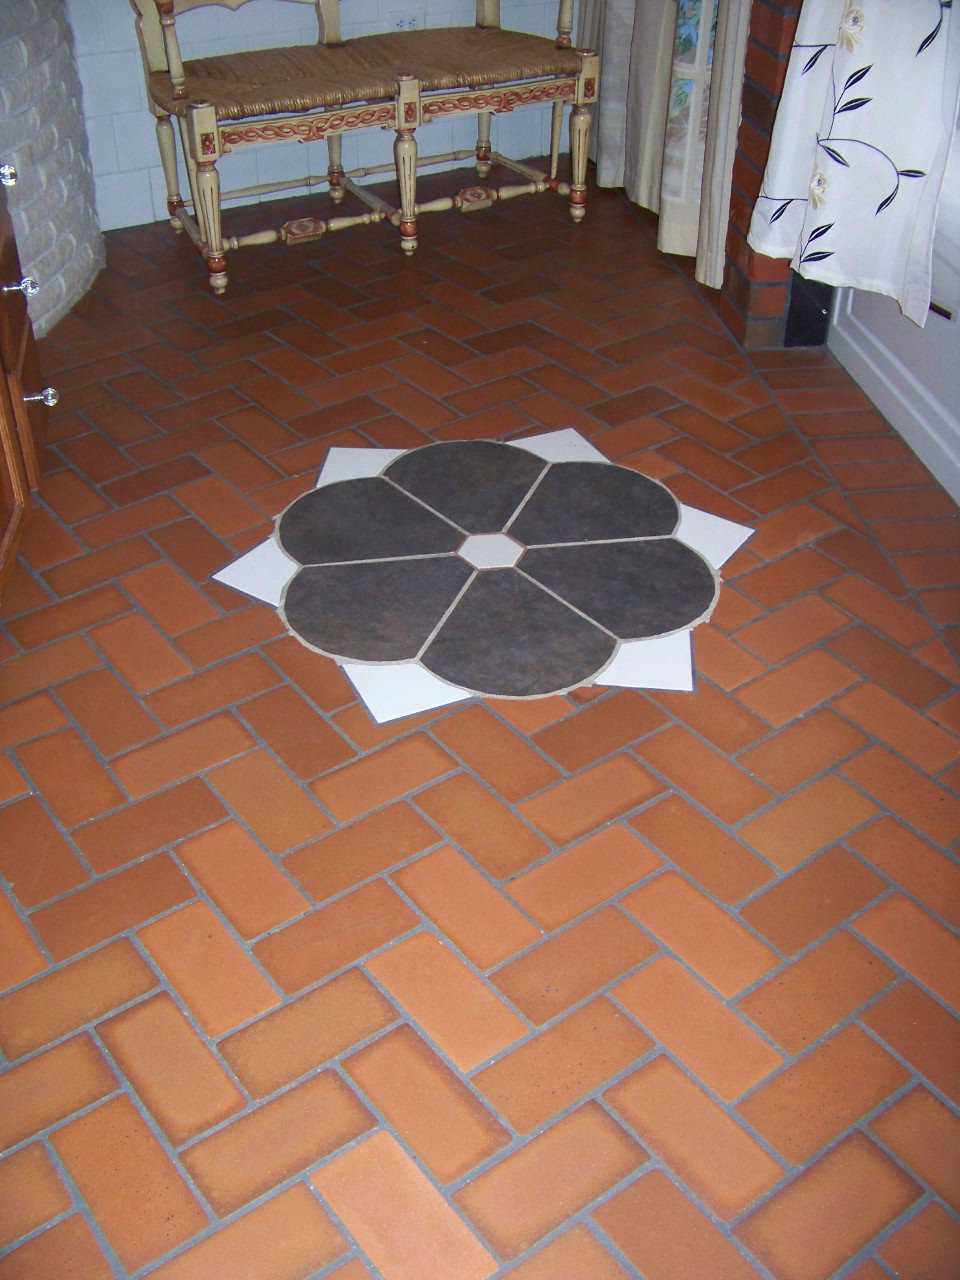 Unique! — Joel enhanced the brick floors with unusual, creative patterns.